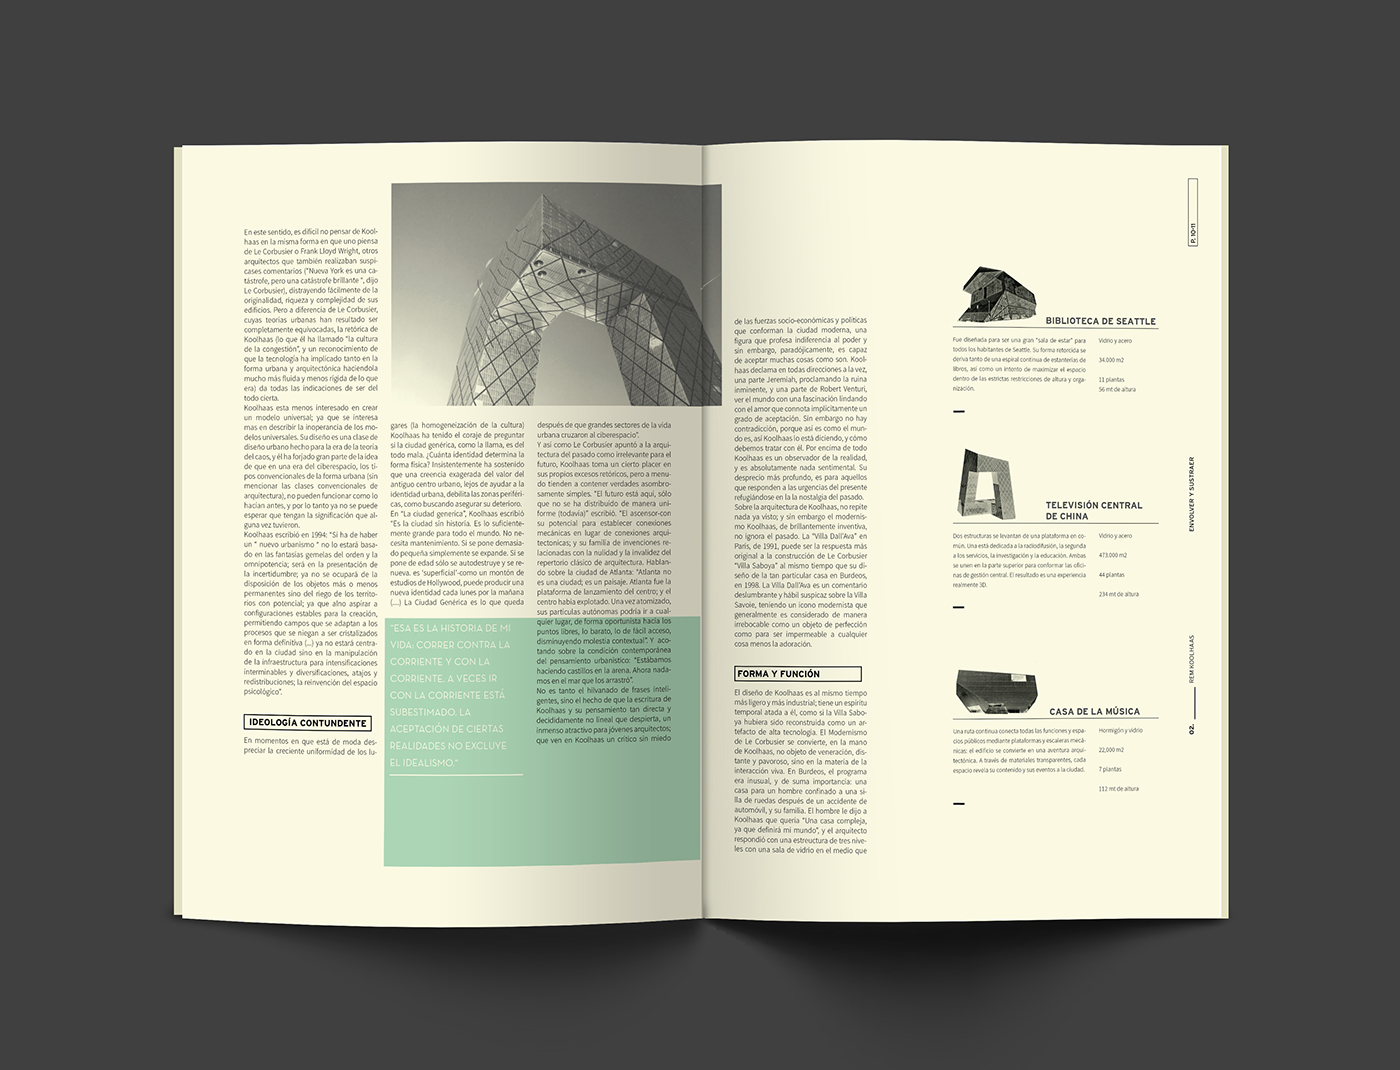 Hacedores de Mundo rem koolhaas fadu catedra gabriele editorial uba architecture PressBook revista